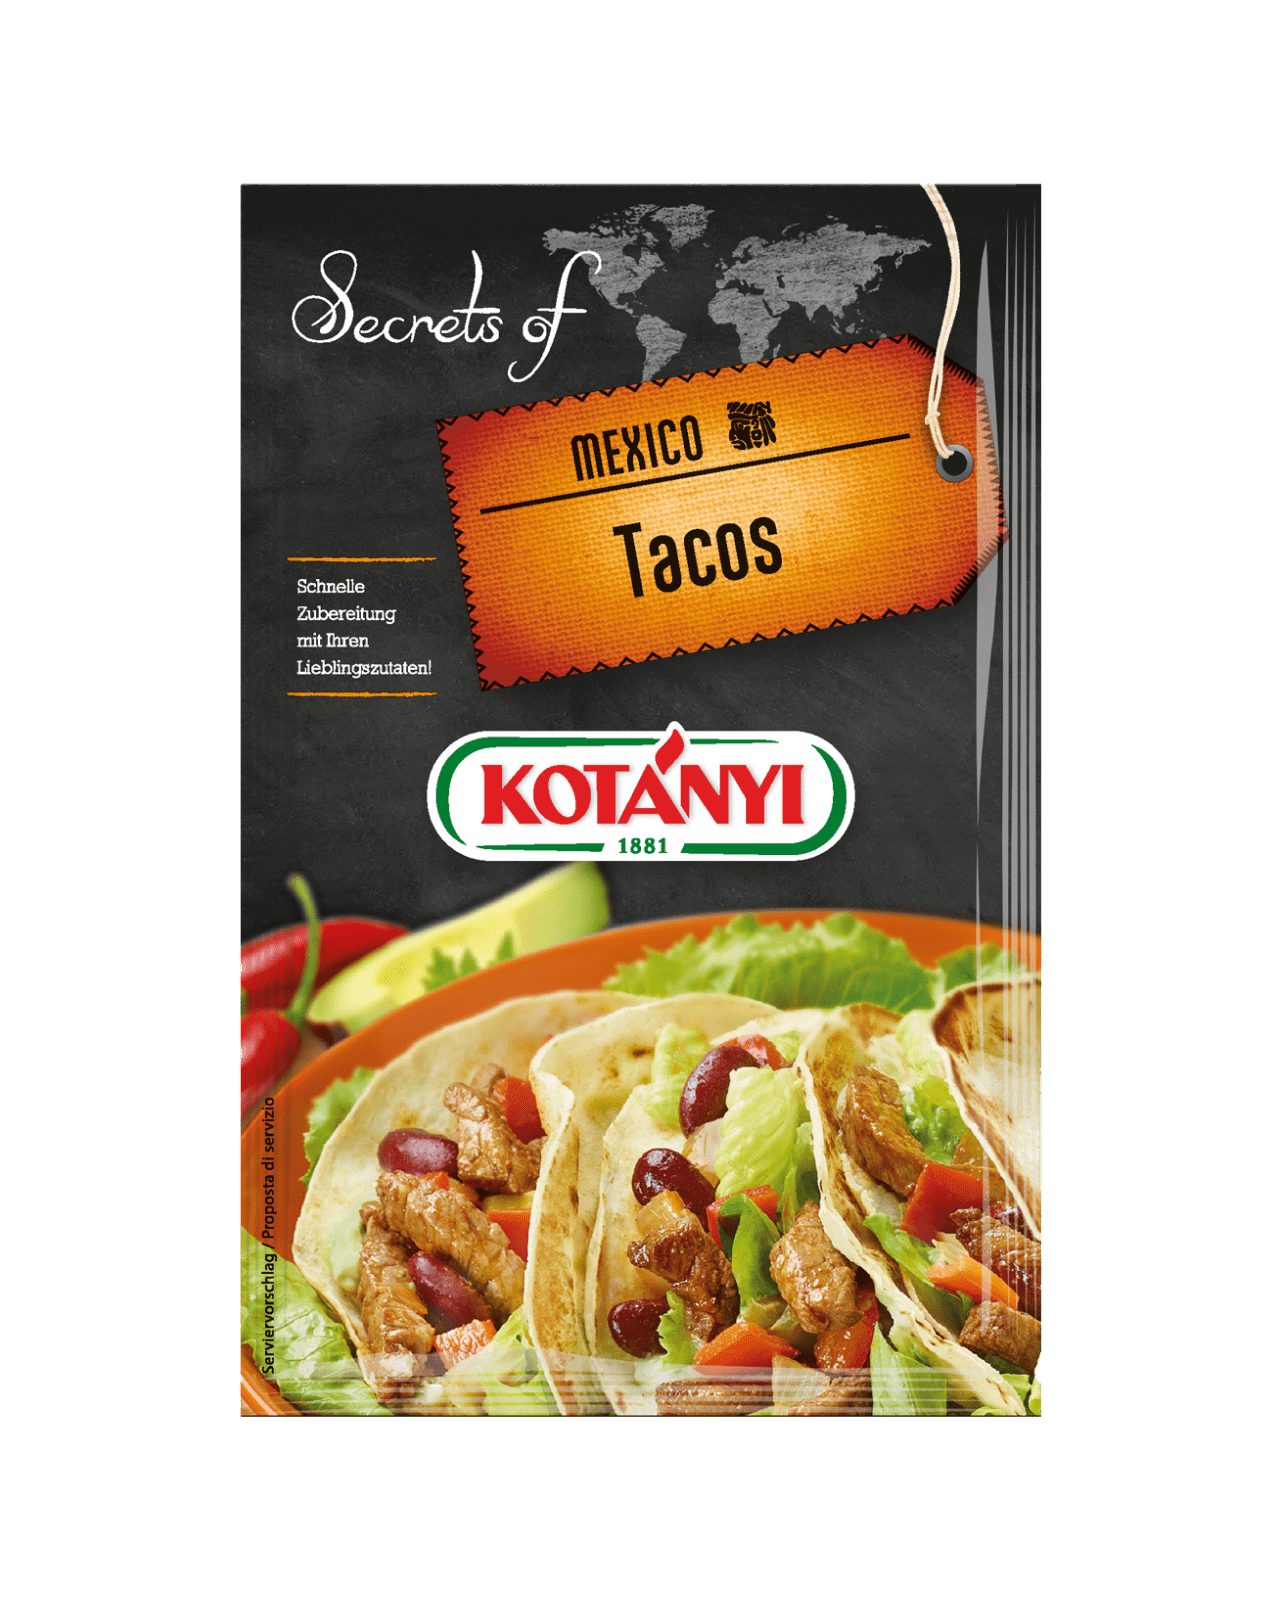 9001414035429 3542016 Secrets Of Mexico Tacos Brief Kotanyi